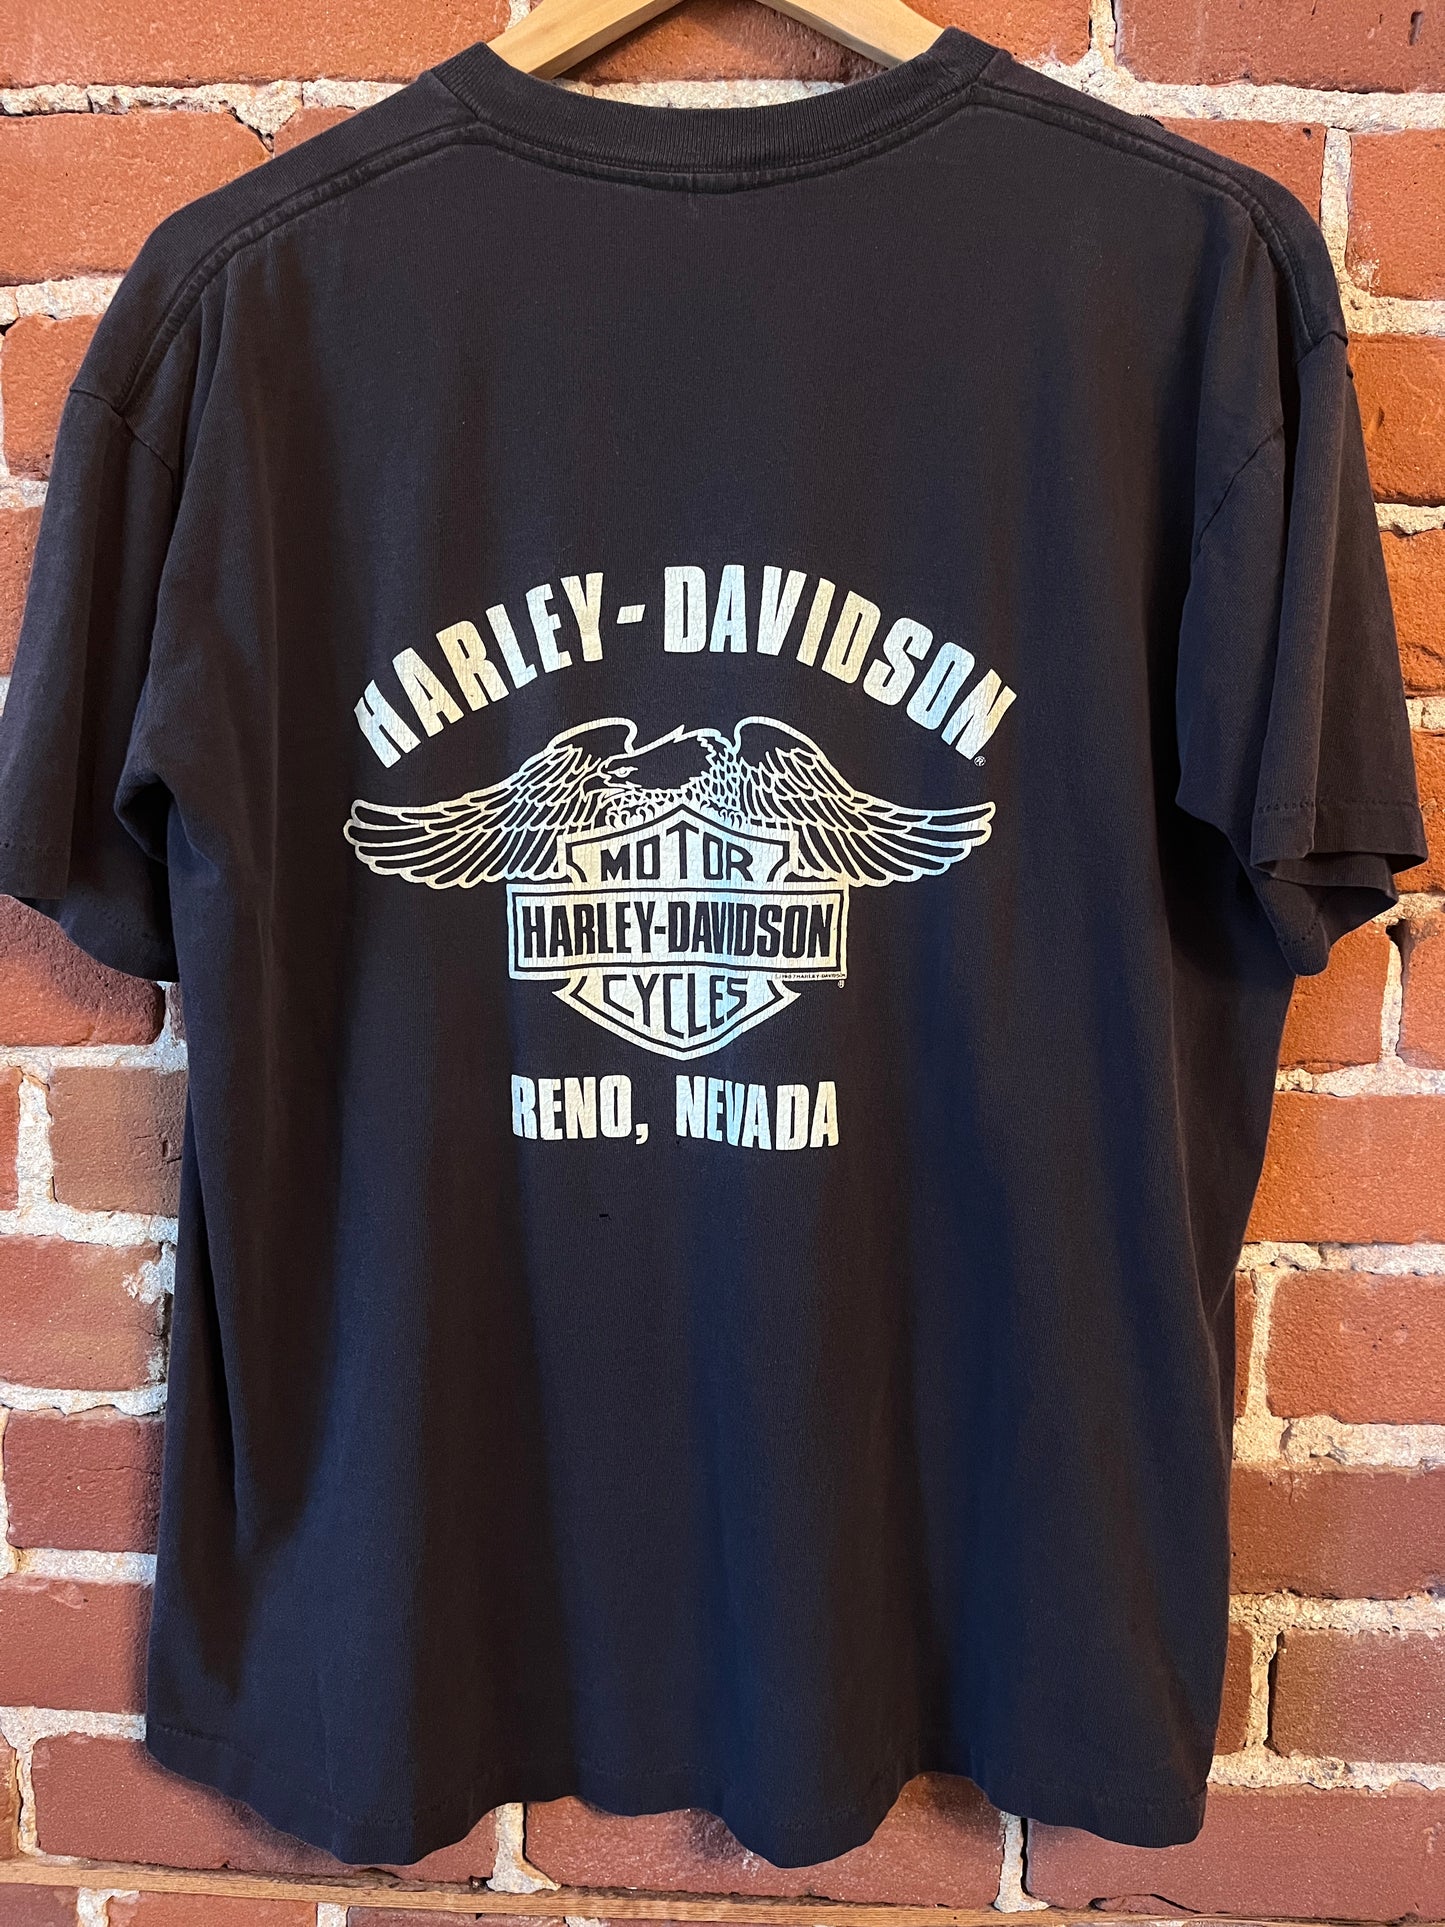 Harley Davidson Man's best friend dog and bike graphic Reno, Nevada '98